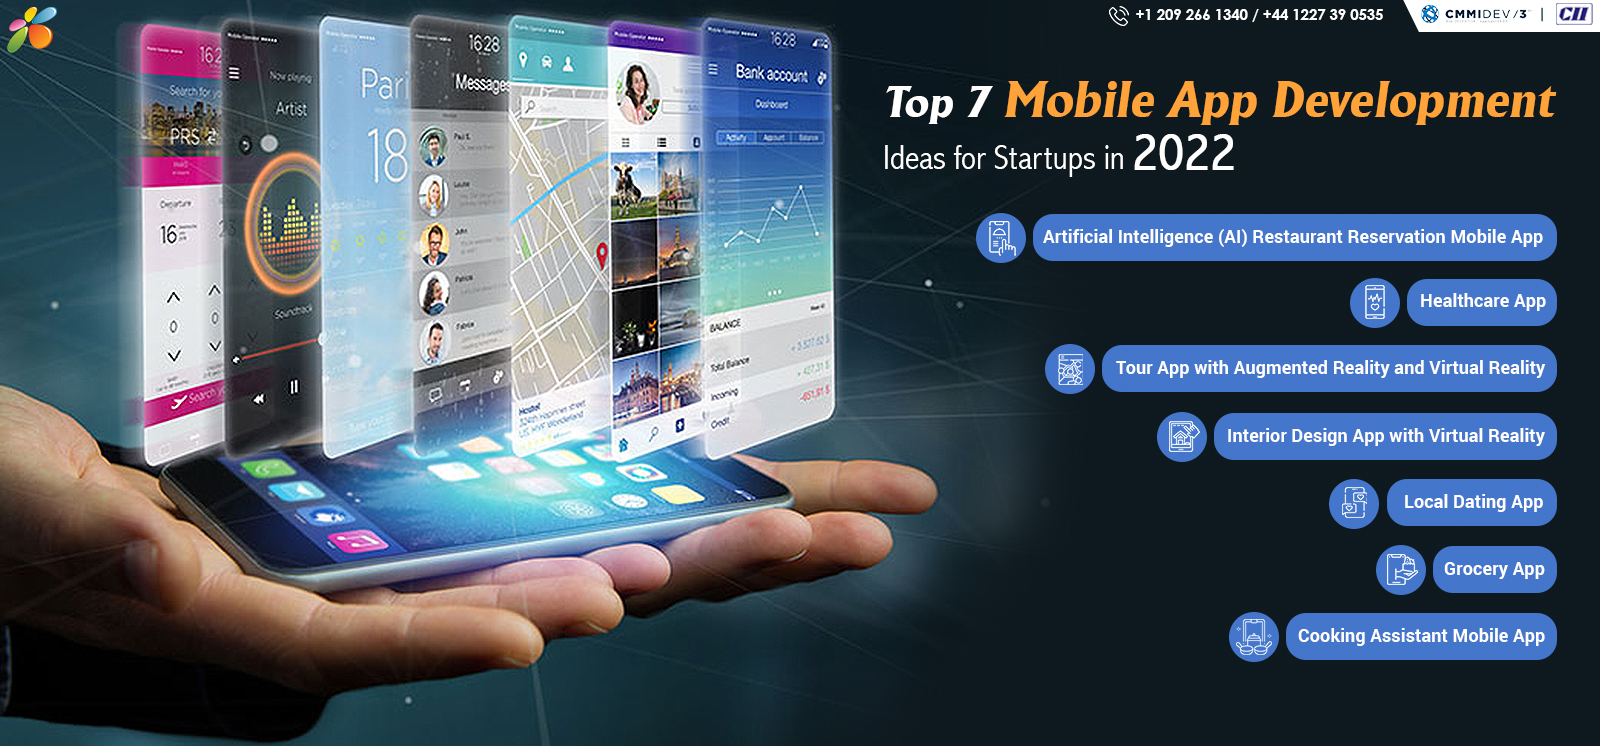 Top 7 Mobile App Development Ideas for Startups in 2022